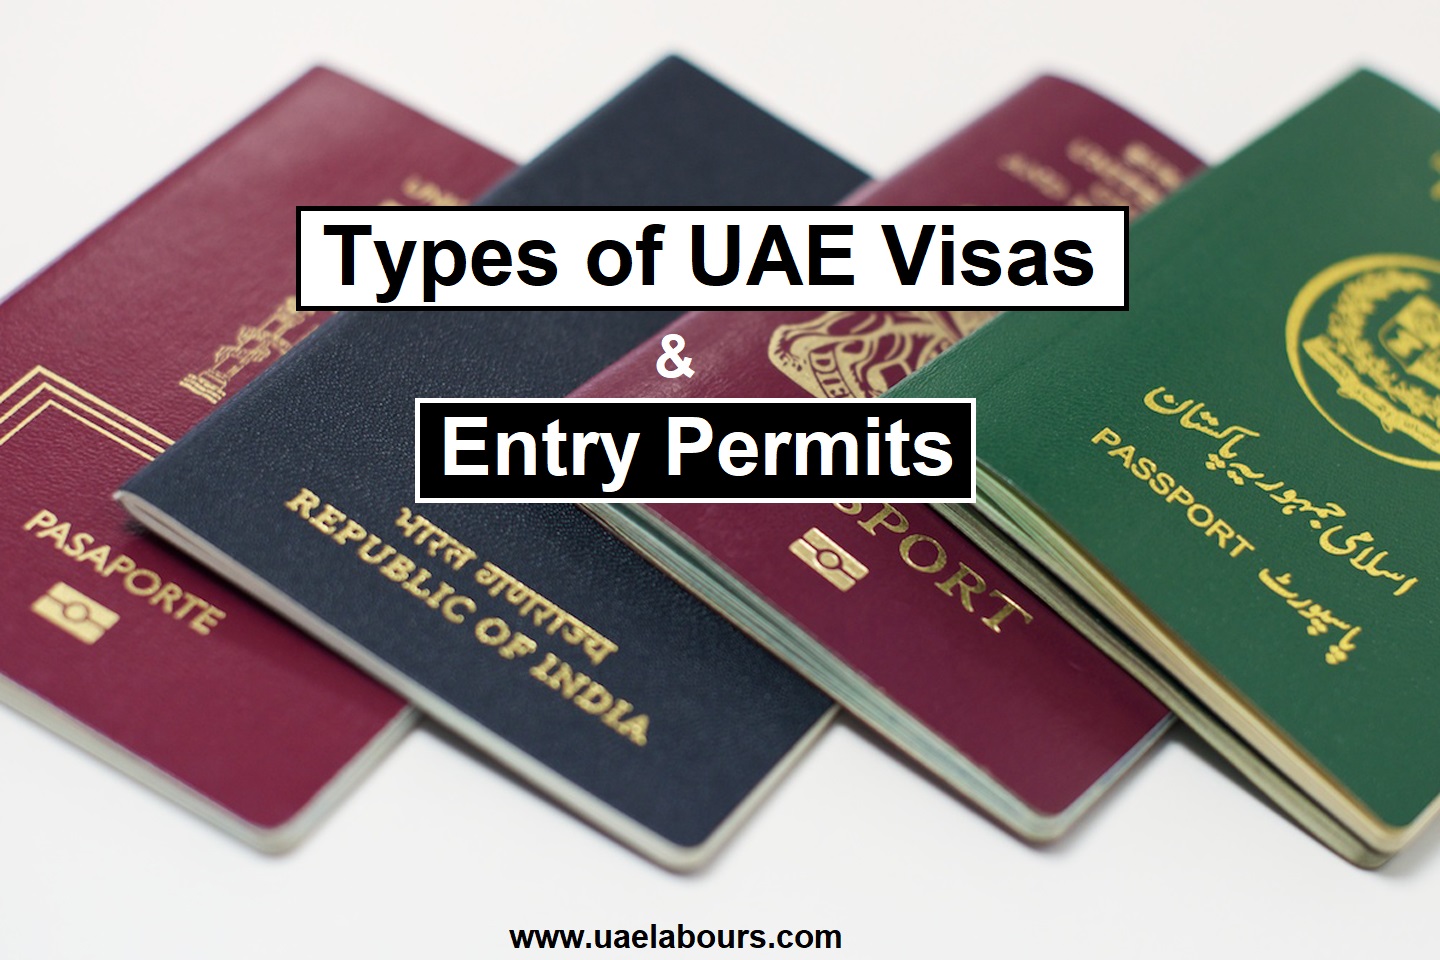 Uae visa. Виза ОАЭ. Dubai student visa. Transit visa UAE.